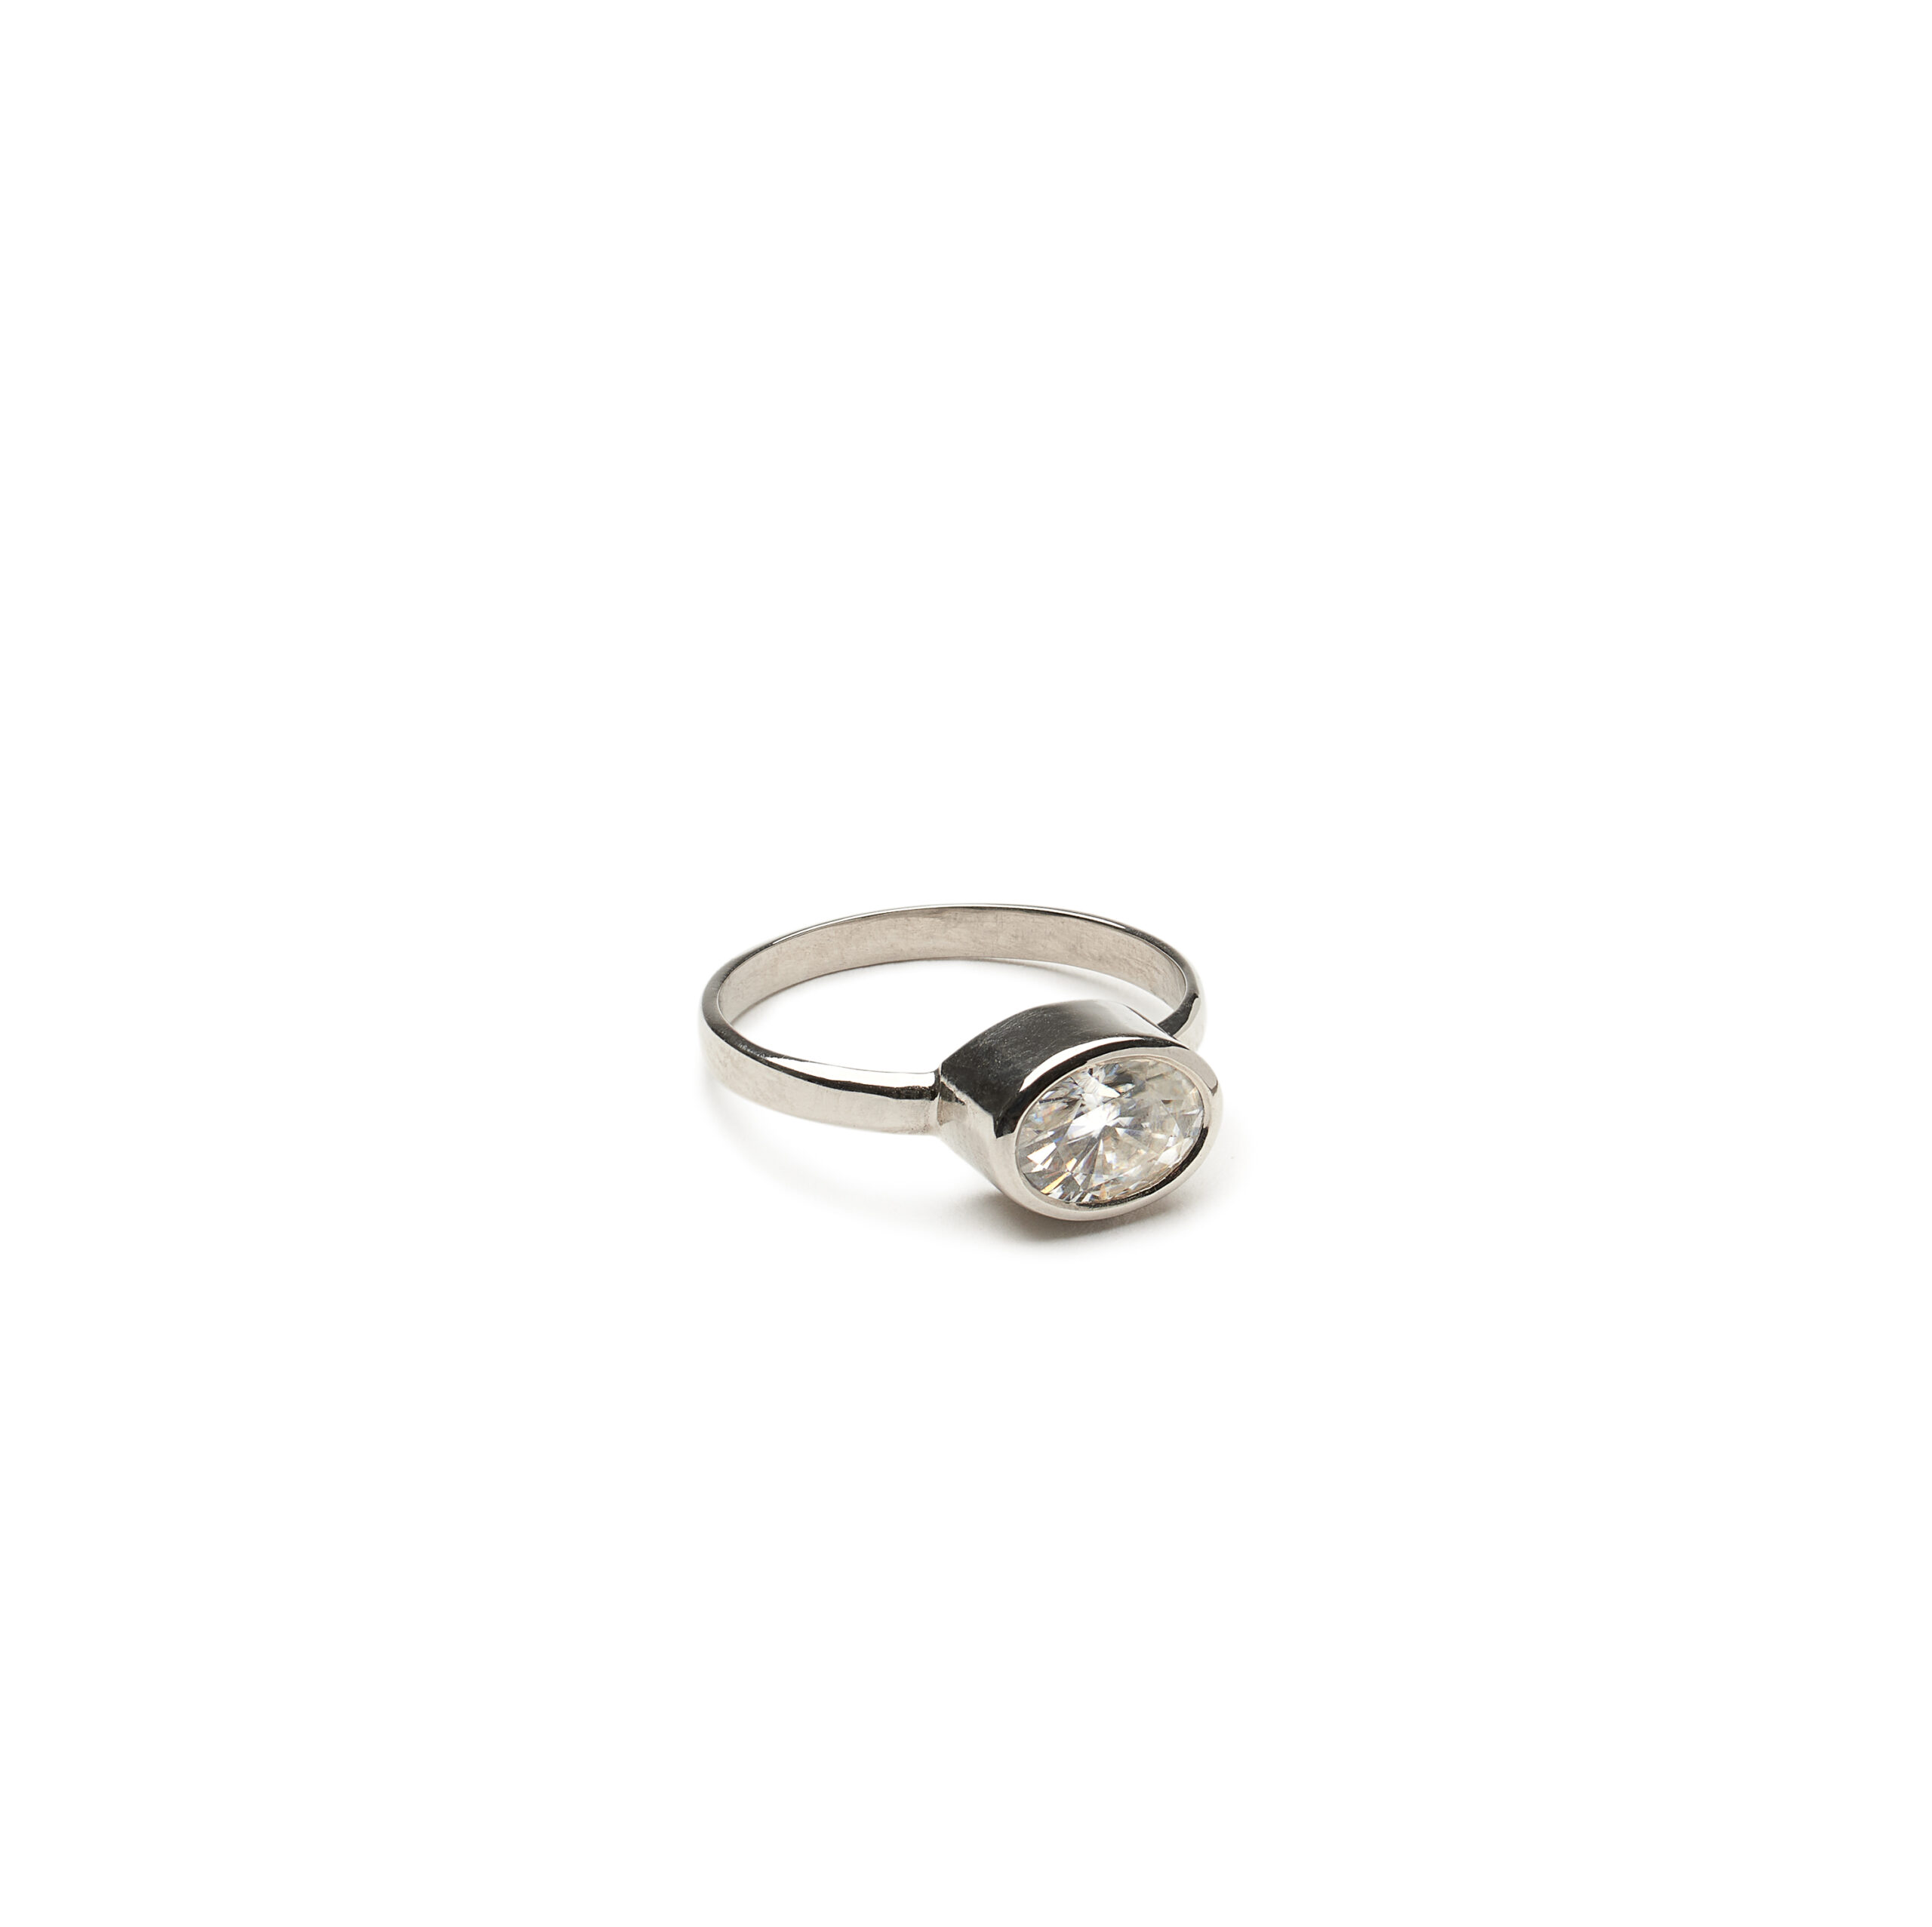 Silver ring with horizontal white gemstone